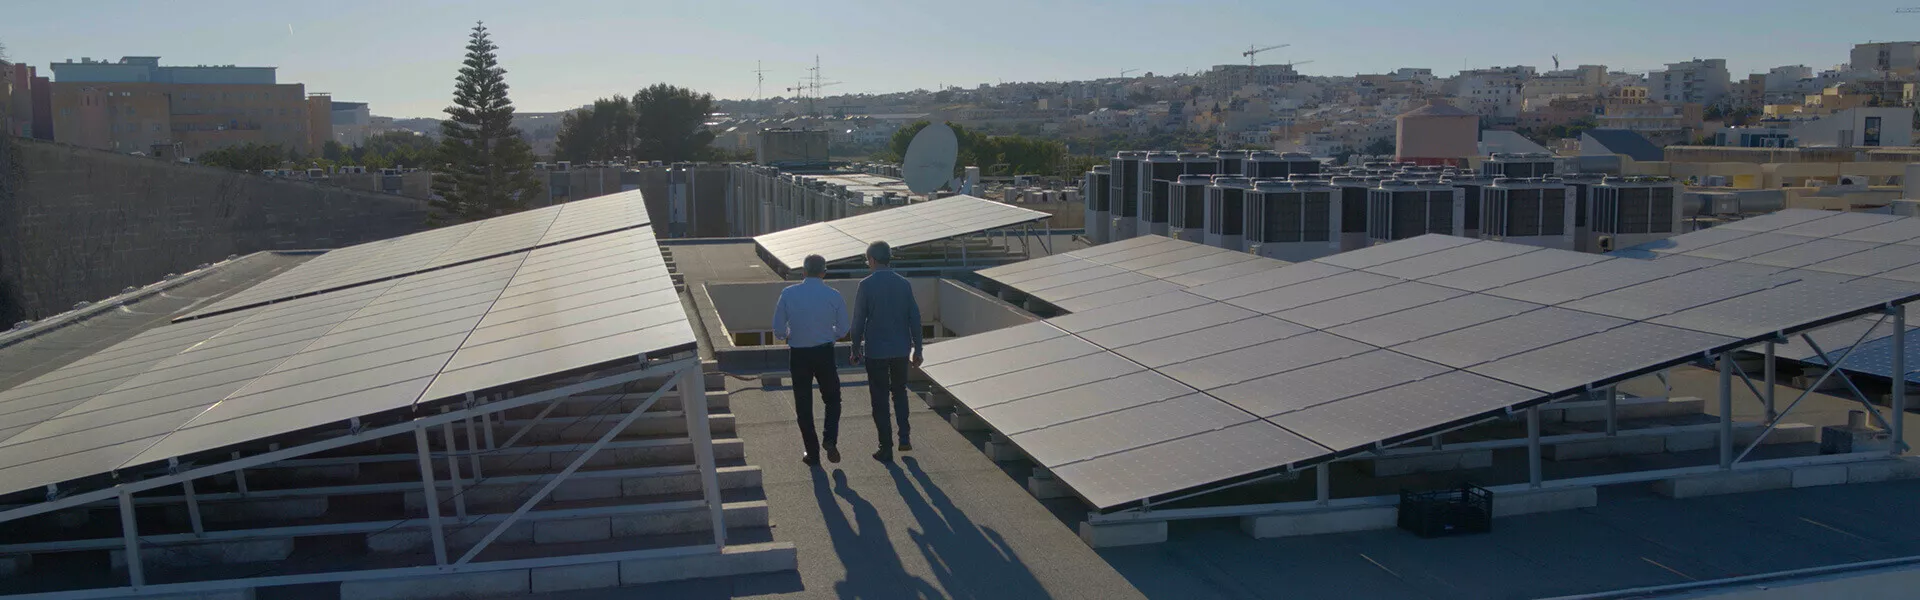 Rooftop with Solar Panels Malta University